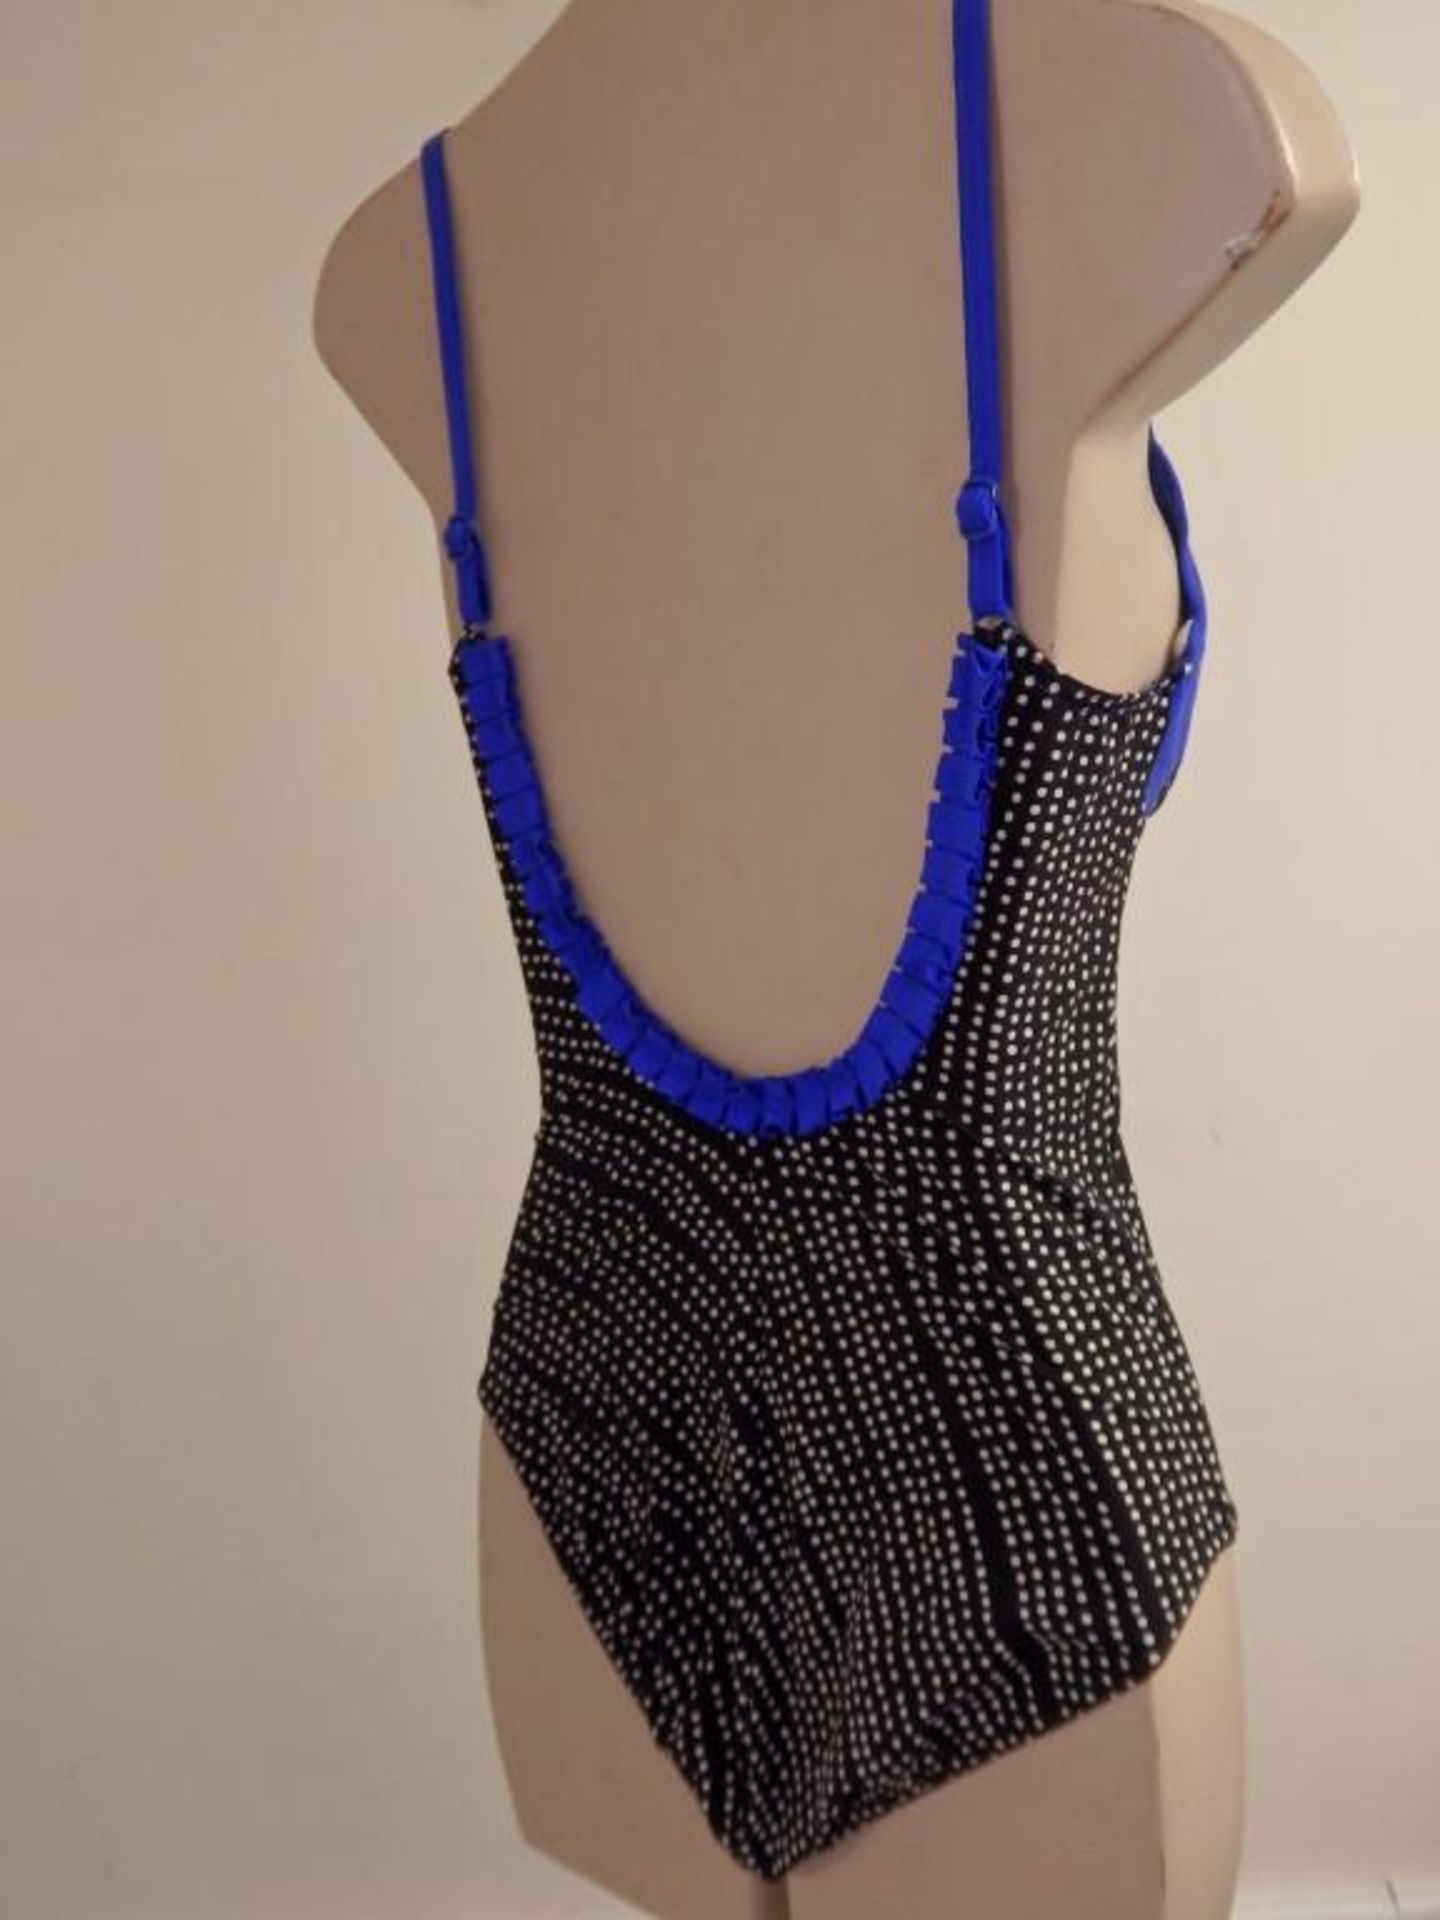 1 x Rasurel - Black Polka dot with royal blue trim & frill Tobago Swimsuit - B21039 - Size 2C - UK 3 - Image 4 of 8